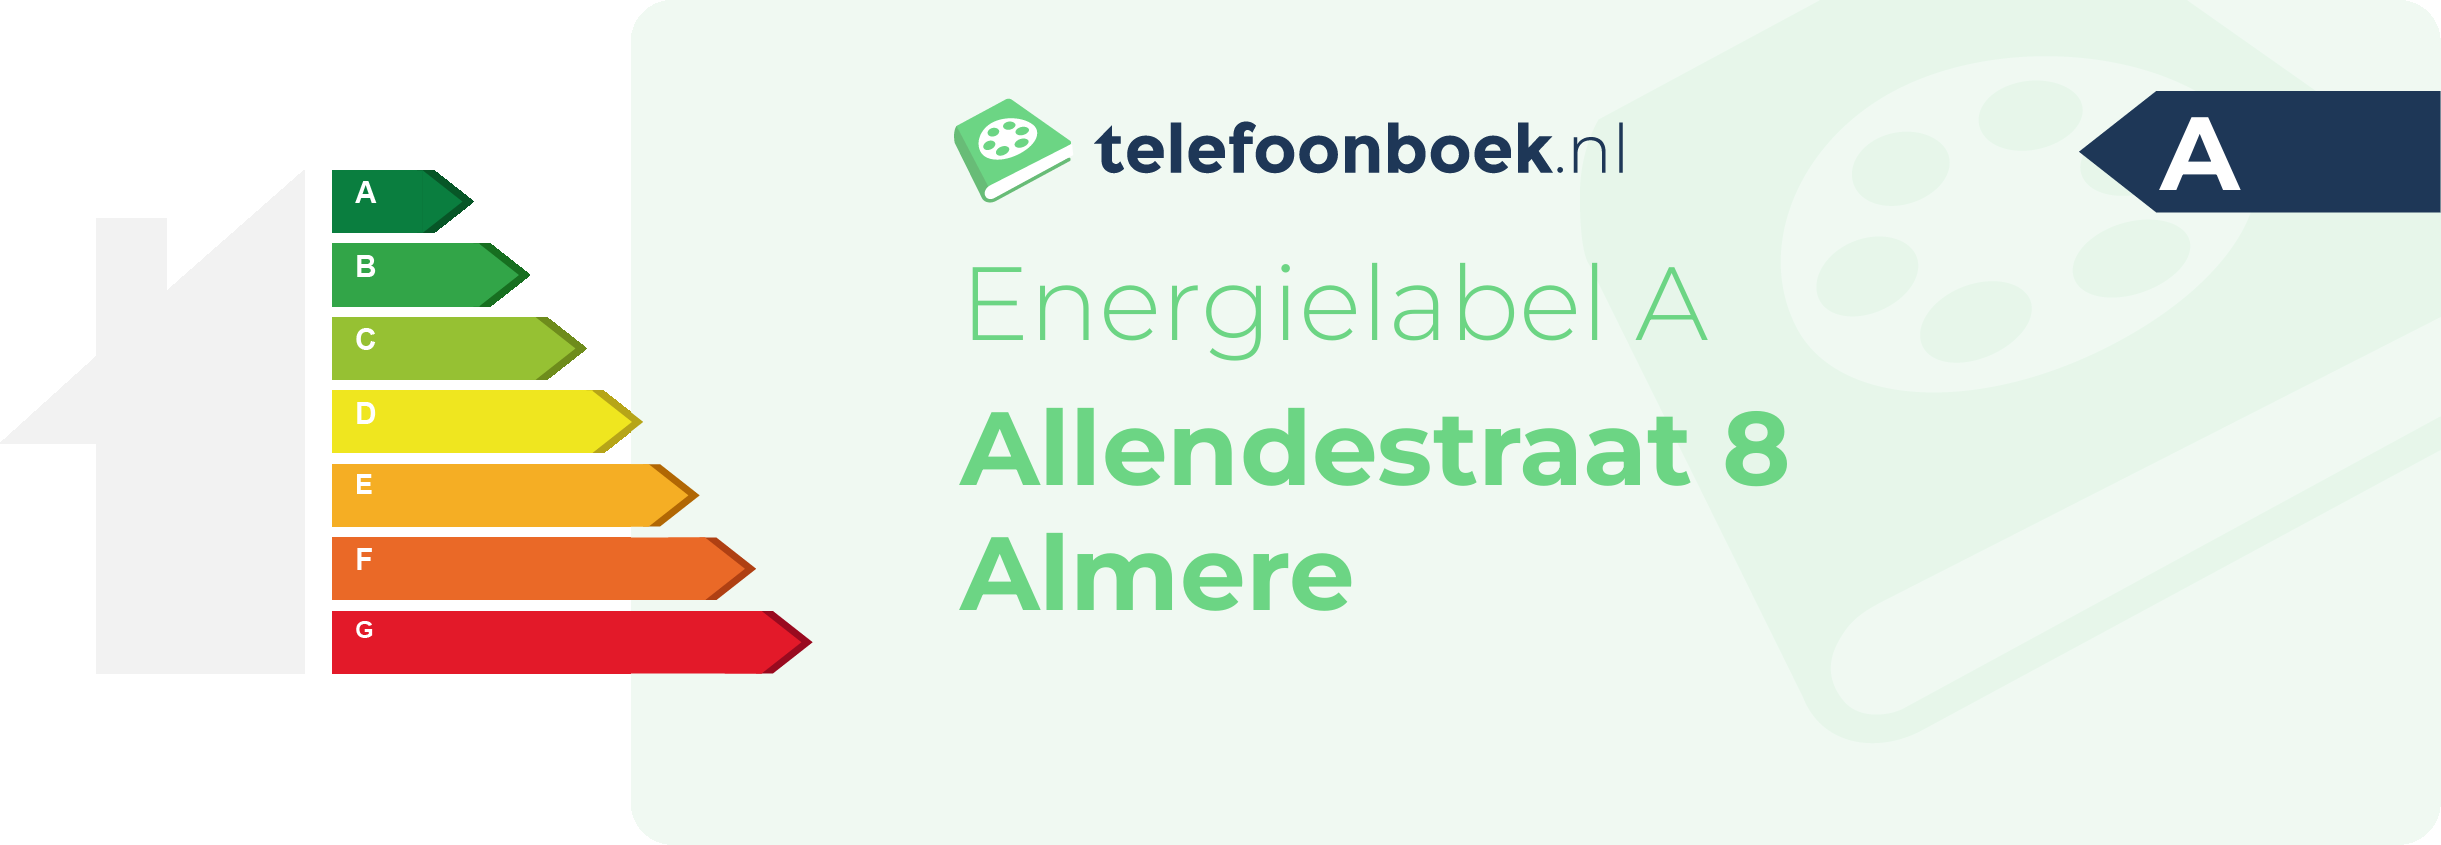 Energielabel Allendestraat 8 Almere